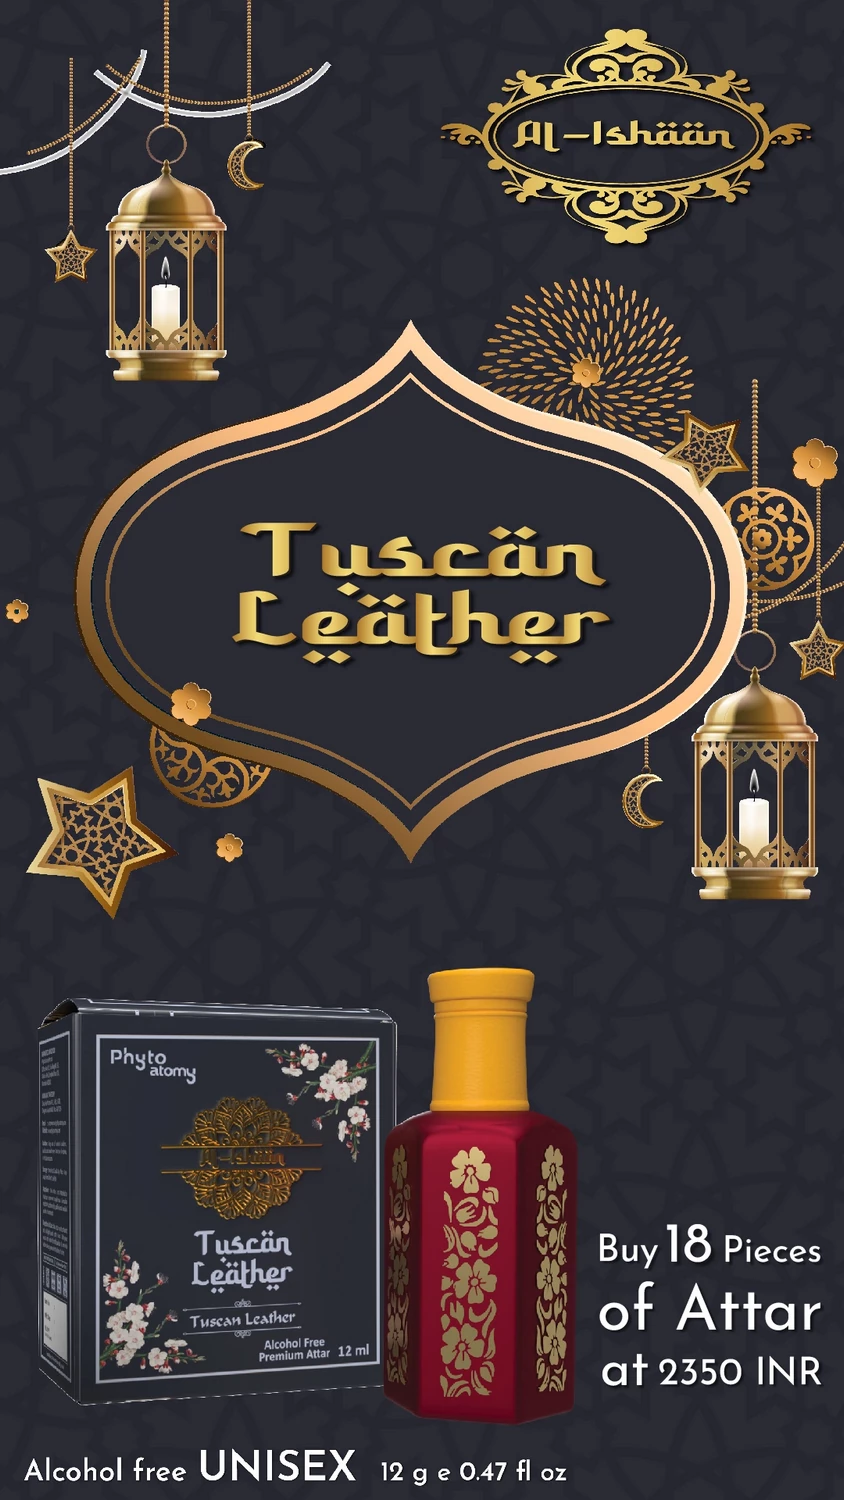 SCBV B2B Tuscan Leather Attar Soap (50g)- 36 Pcs.